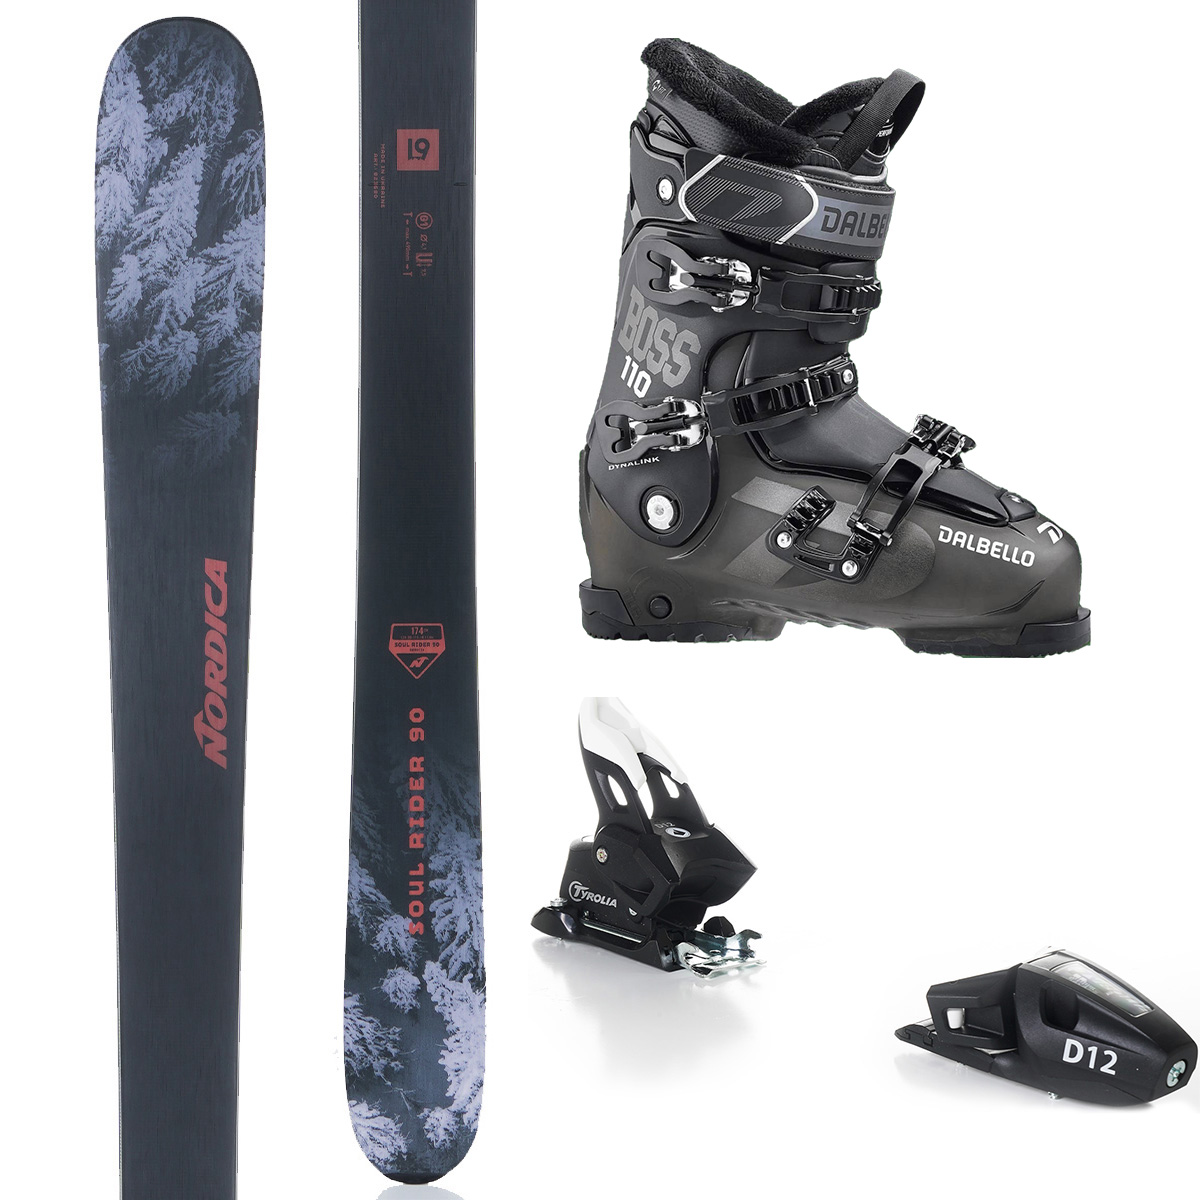 Nordica Soul Rider 90 Complete Ski Package with Dalbello Boss 110 Boots